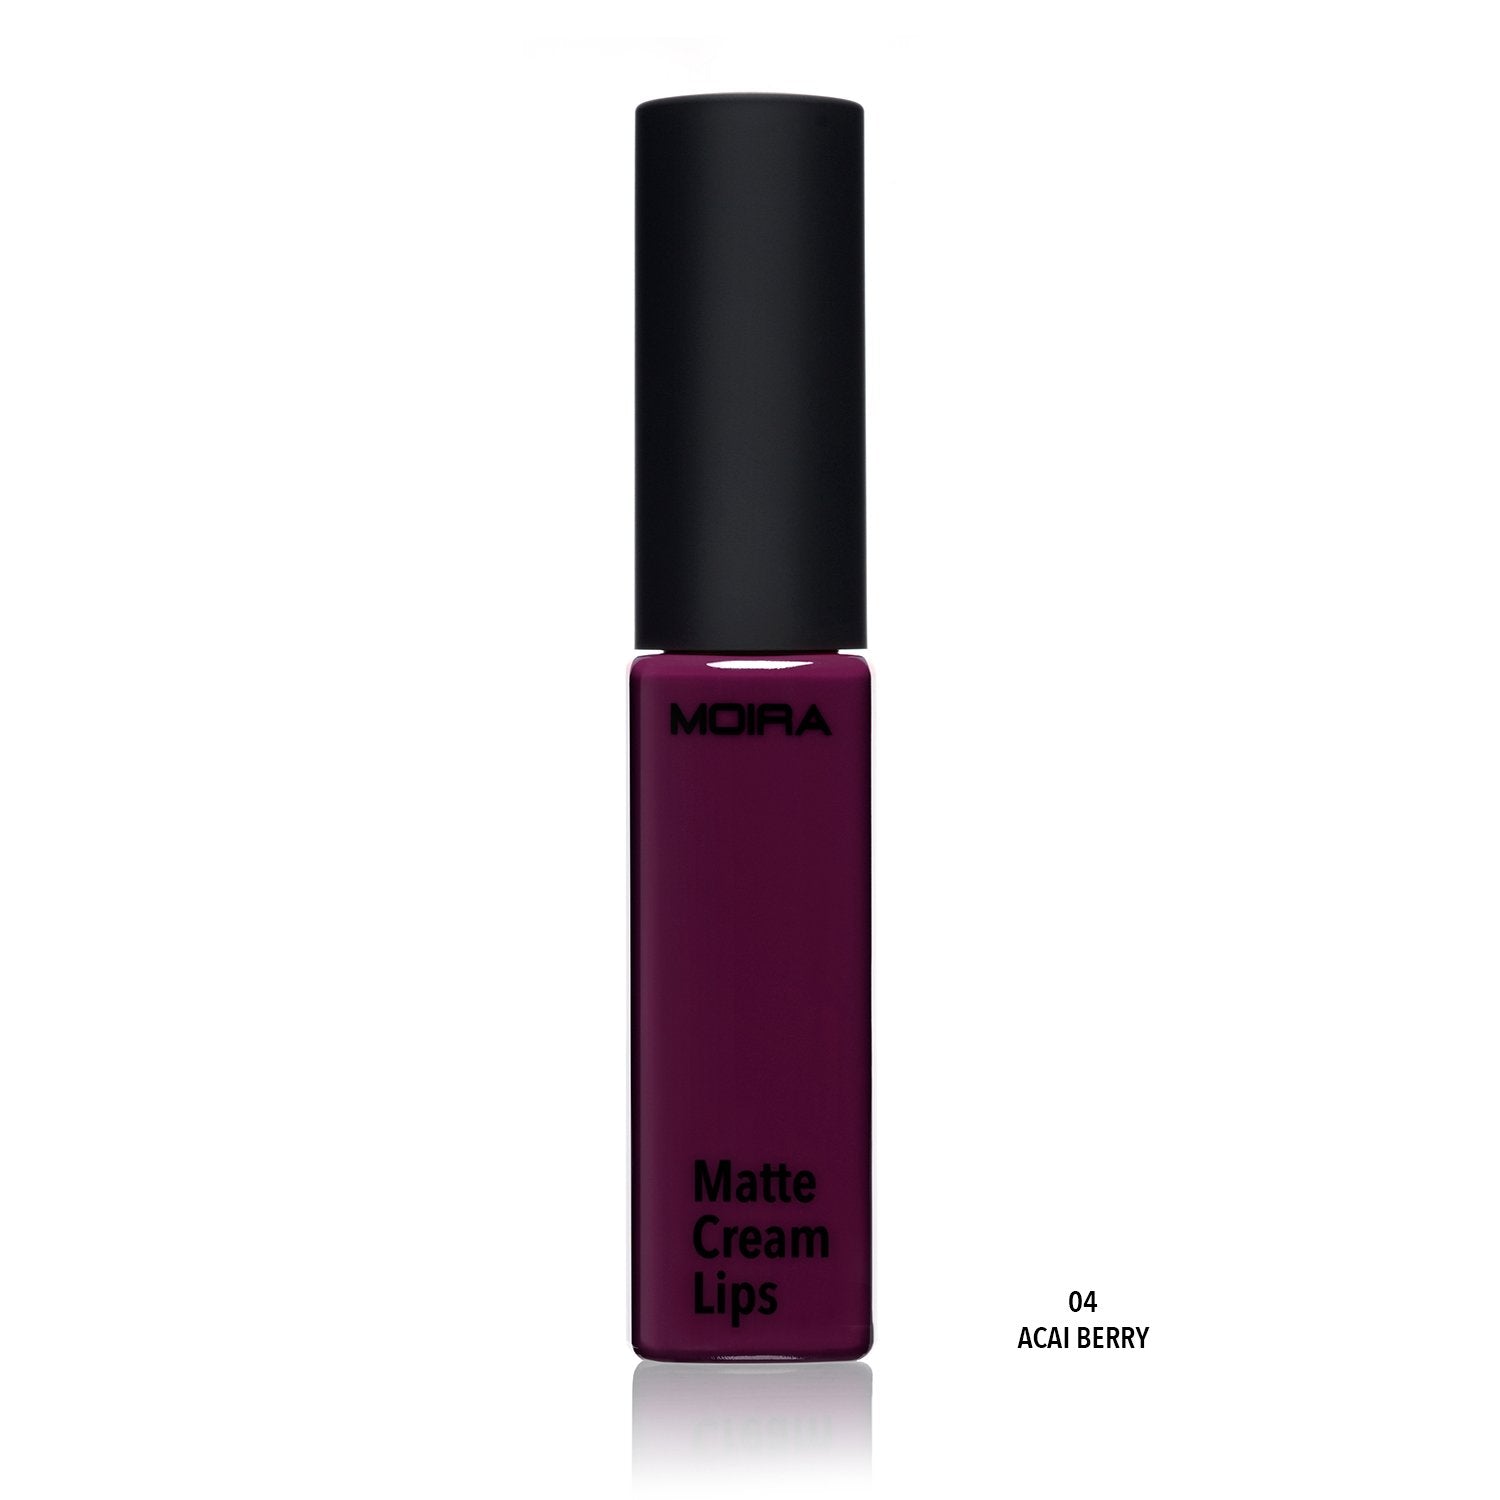 Matte Cream Lips (004, Acai Berry)